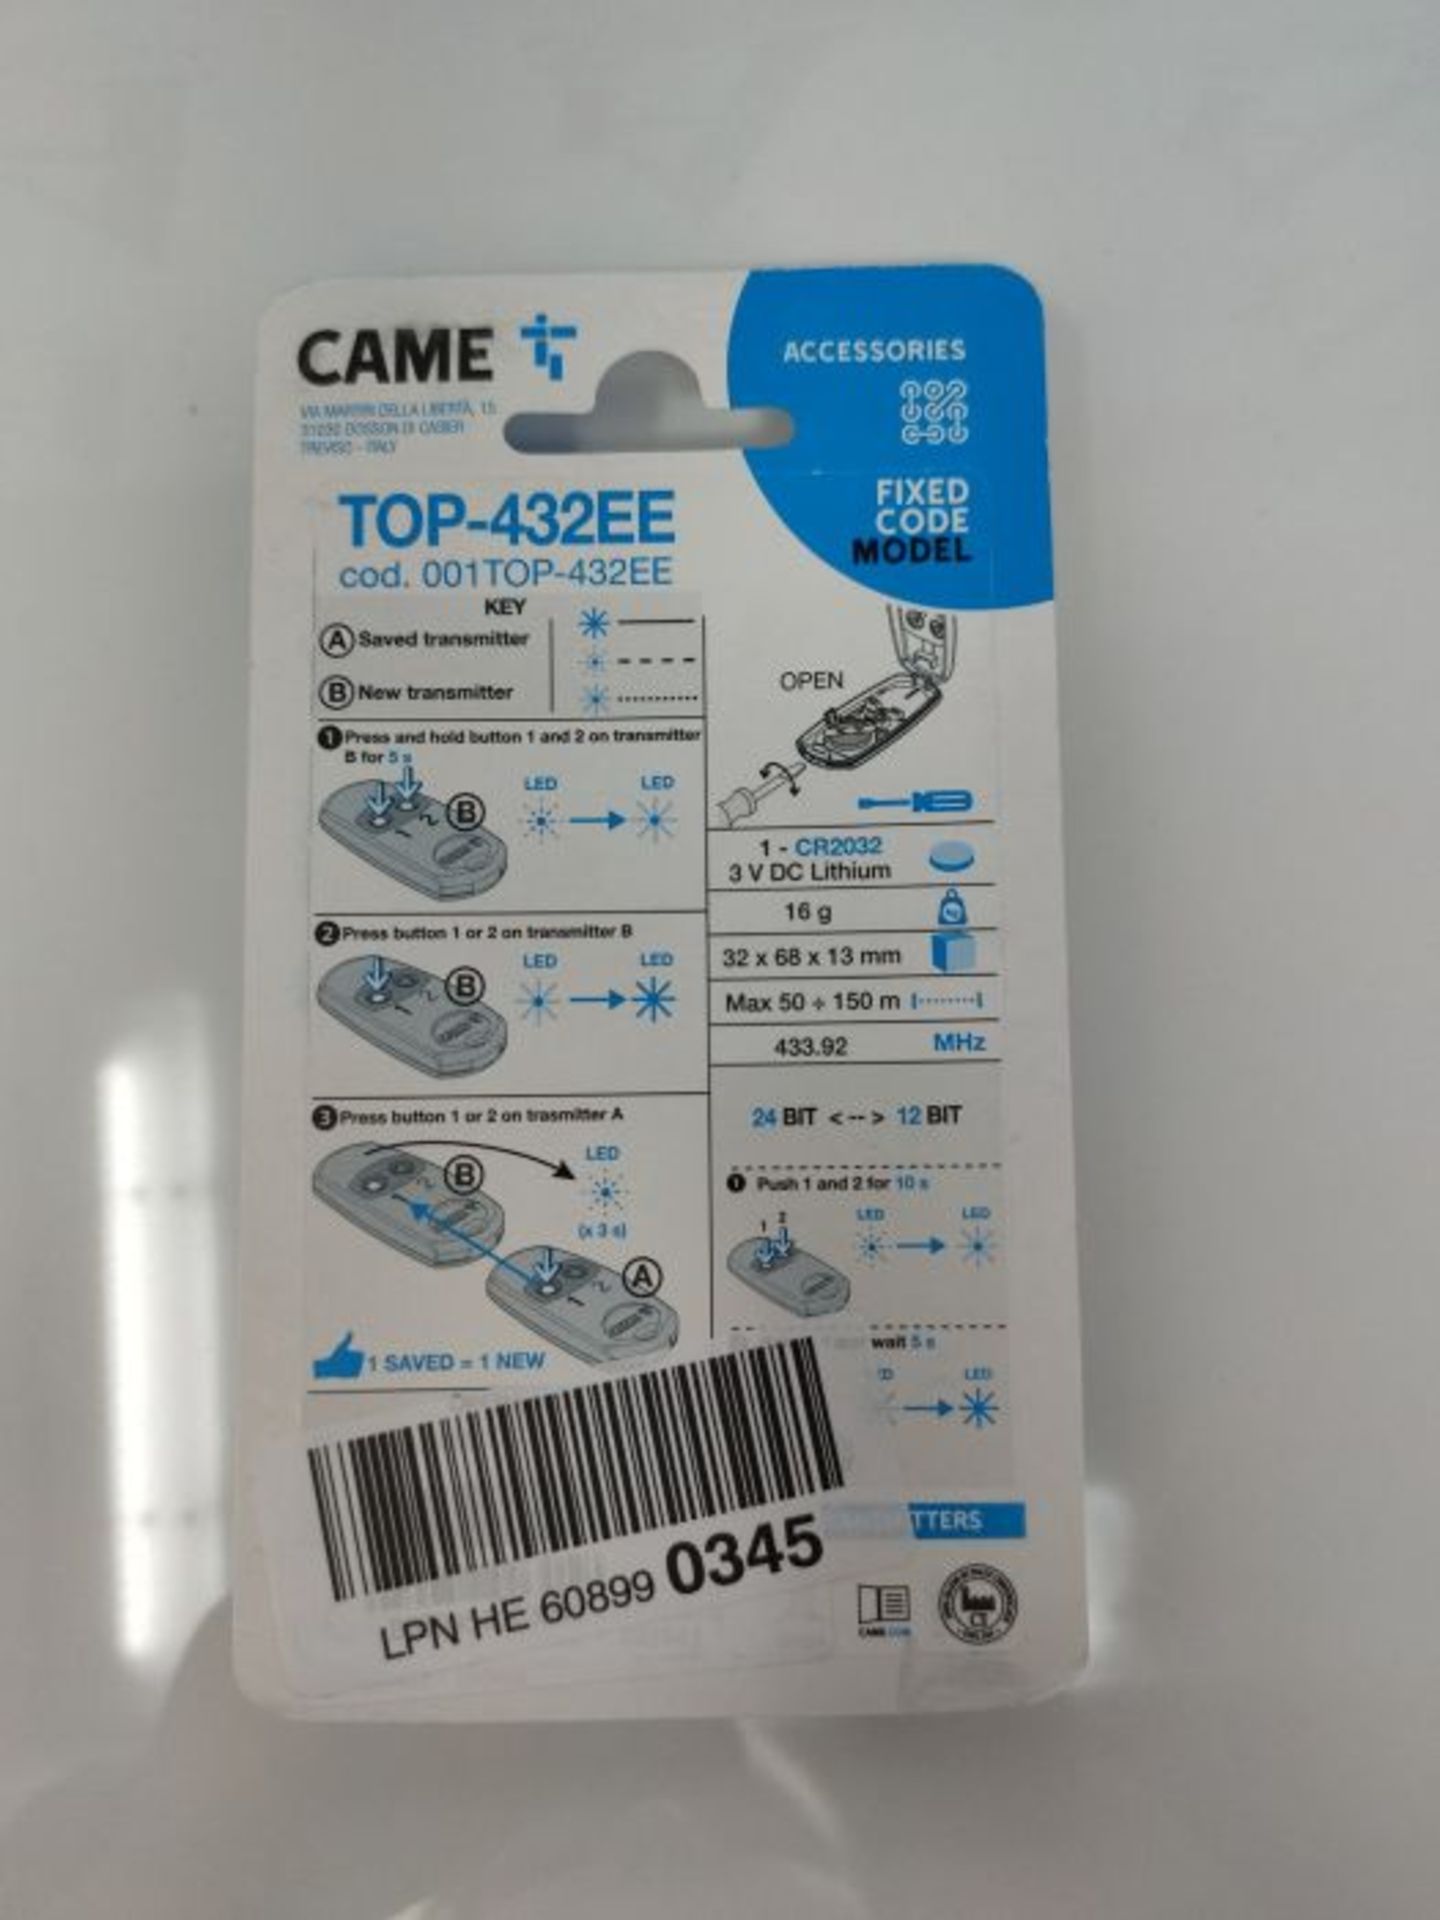 CAME TOP 432 EV Remote Control gate-Opener Original, Replaces TOP432NA - Top 432 S - Image 3 of 3